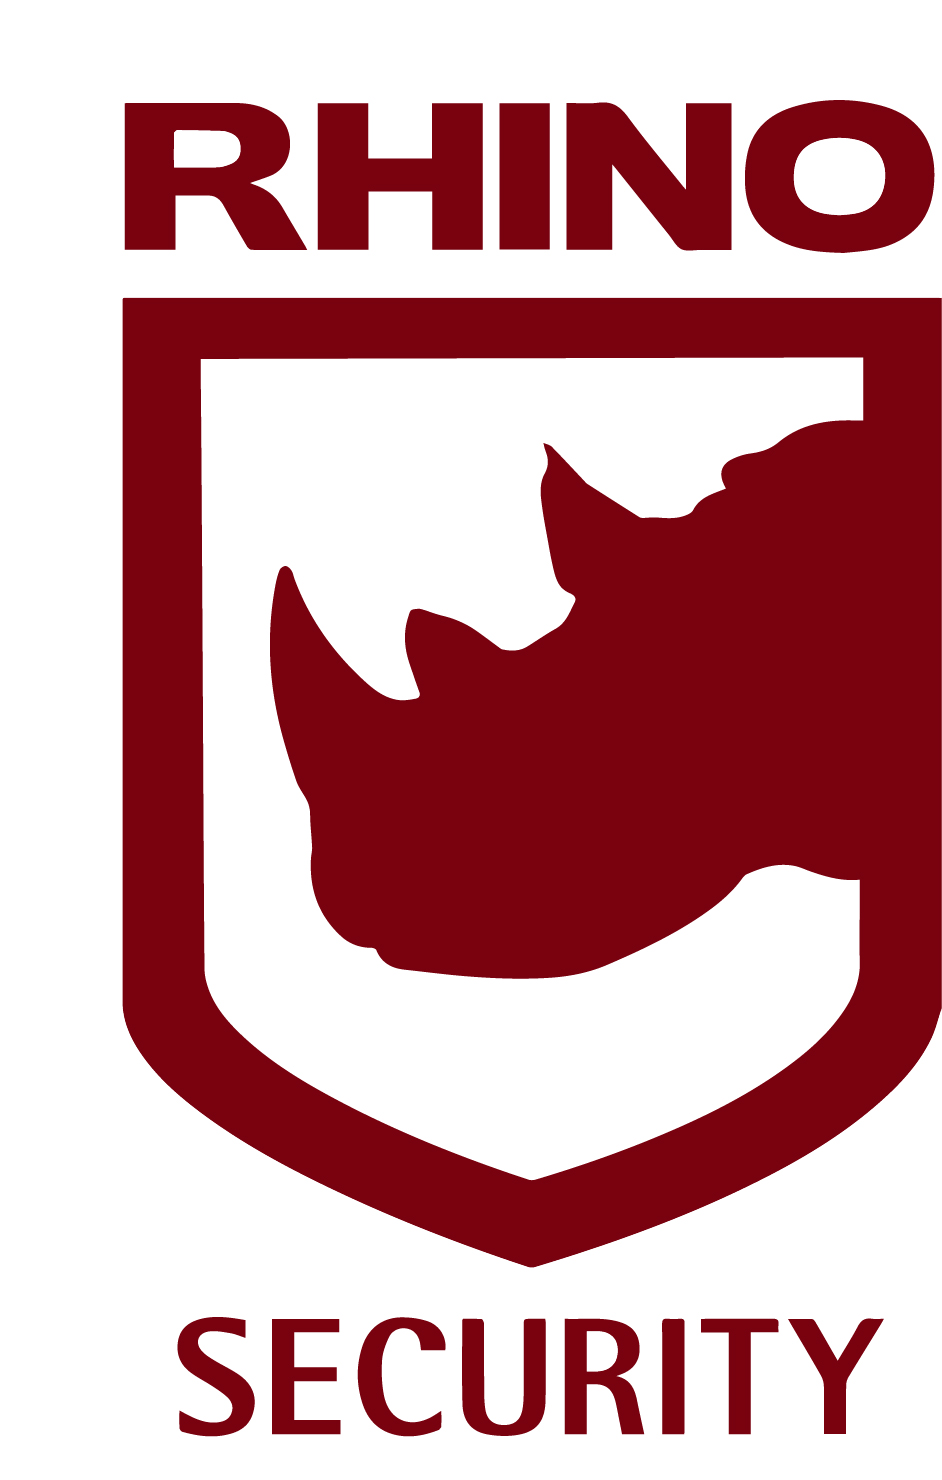 681-vector-rhino-security-logo-copy-16100800194215.jpg